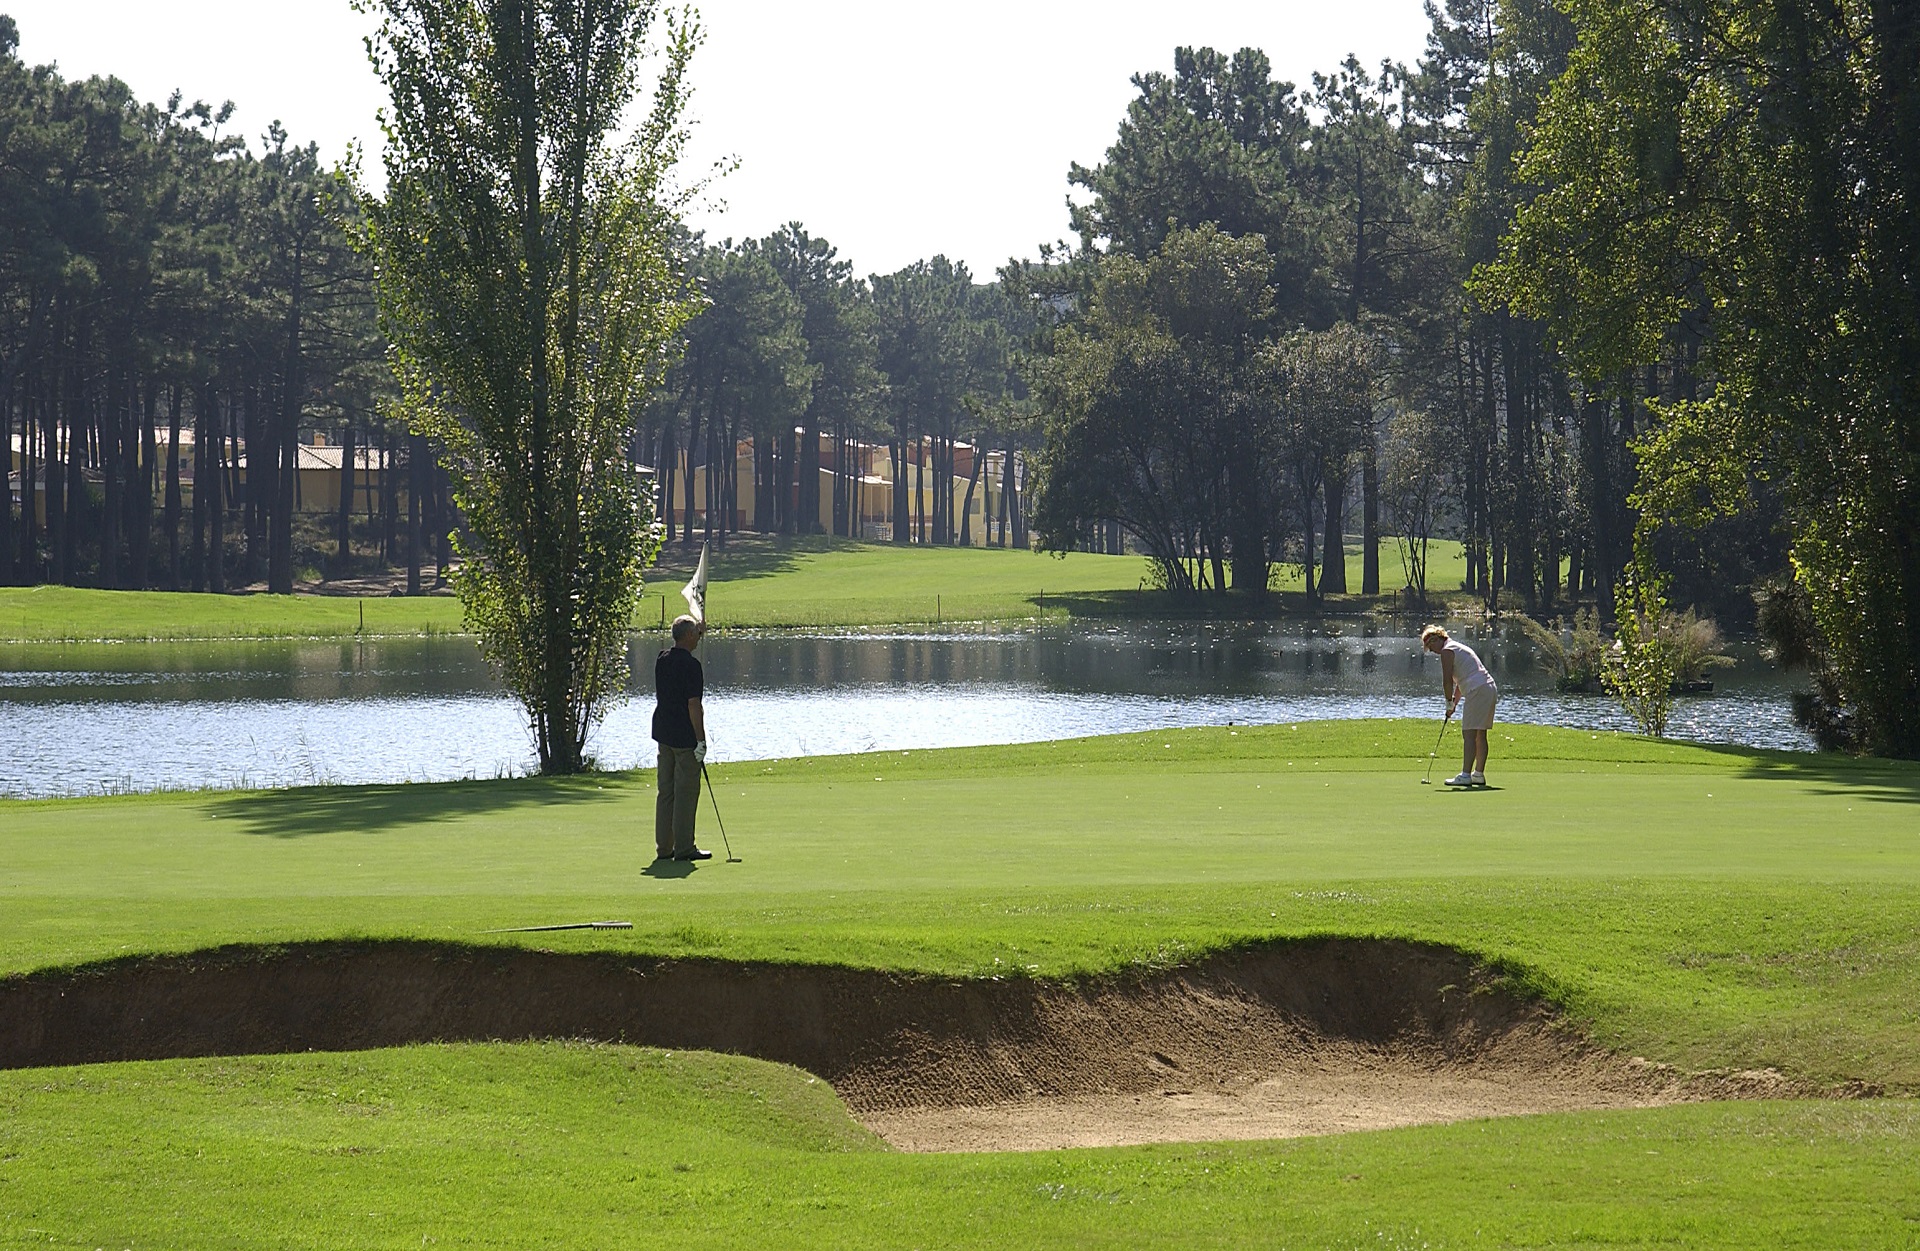 Aroeira Golf Courses | Aroeira Pines Classic